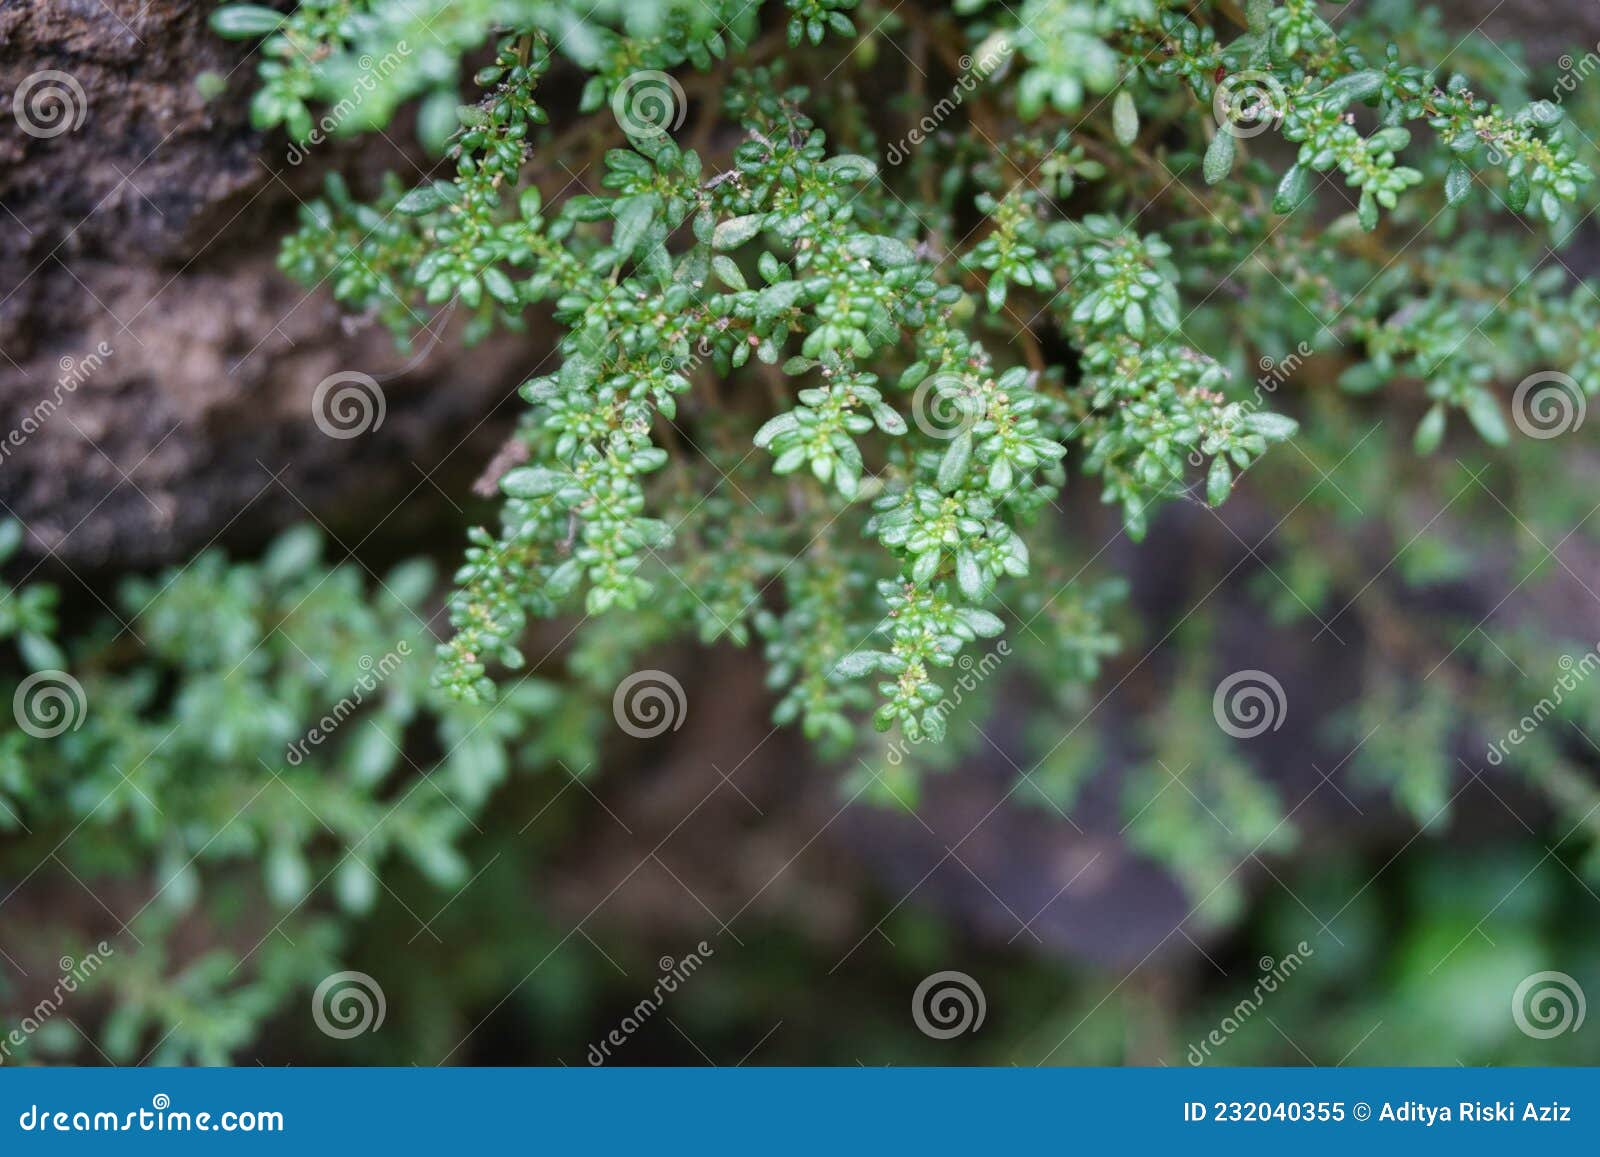 pilea microphylla also called rockweed, artillery plant, gun powder plant, brilhantina, frescura, urticaceae, artillery fern wit